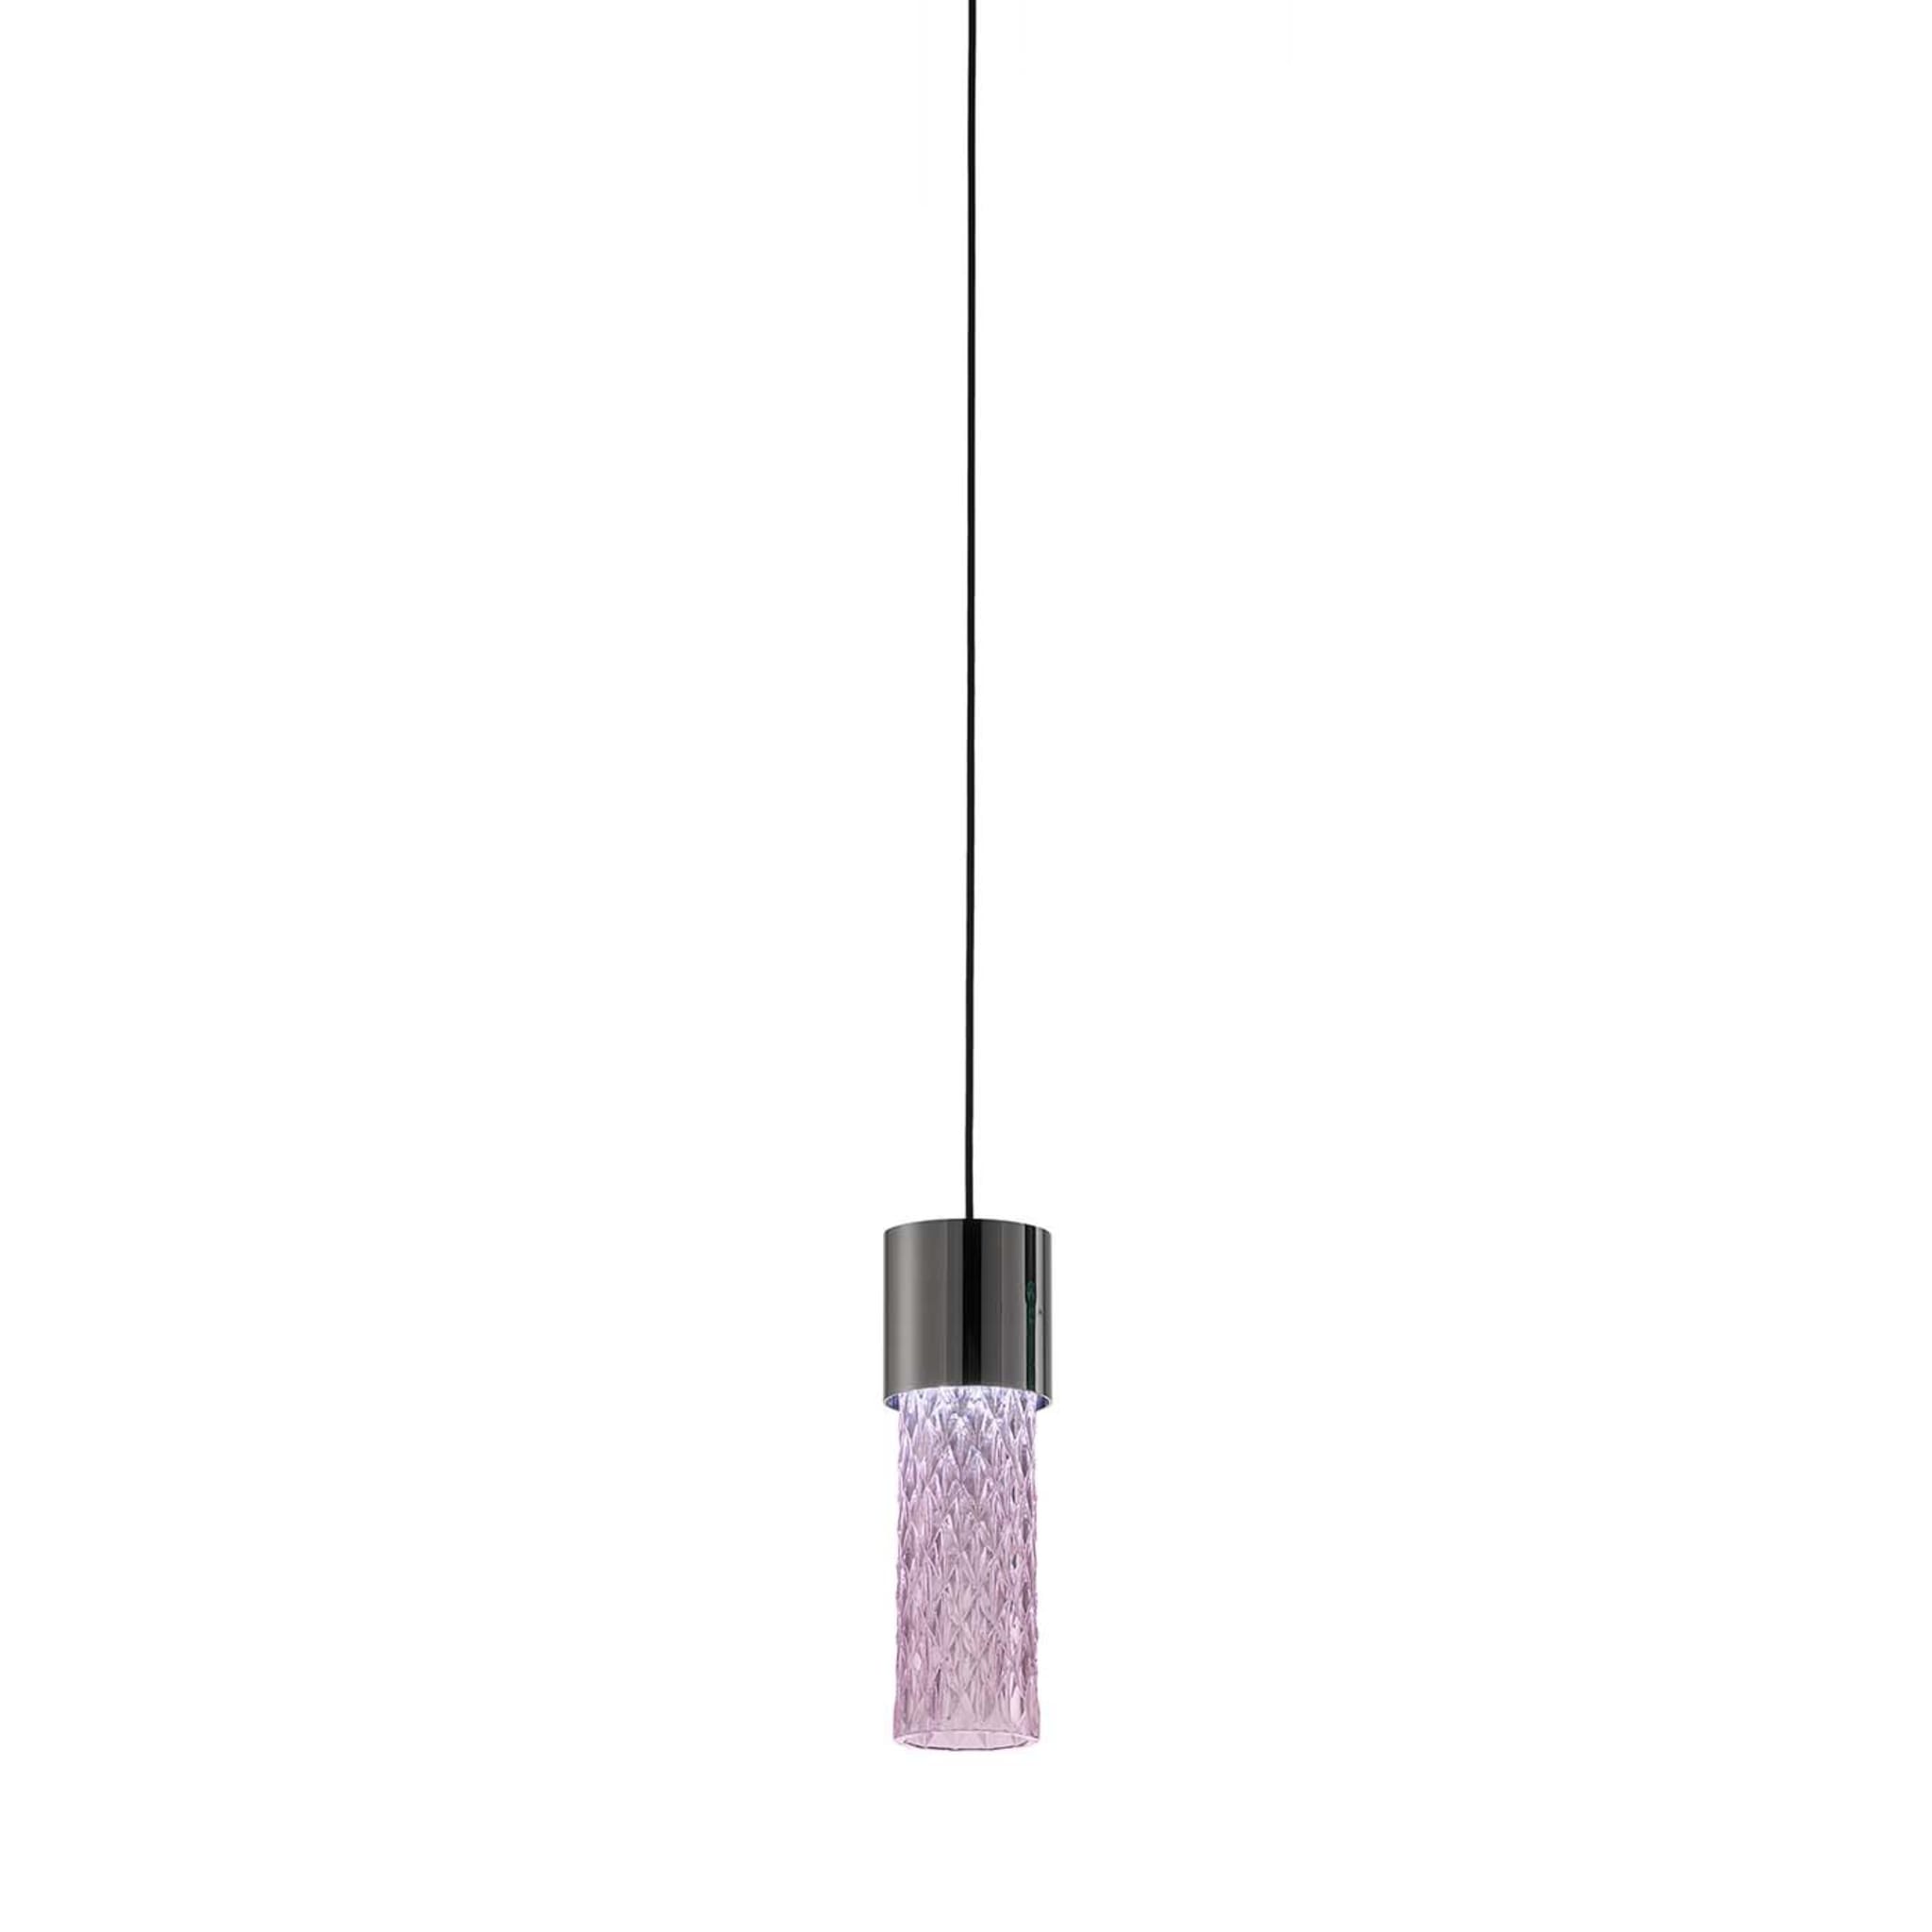 Rosaline Gleam 1 pendant lamp Txxnty Brand Design